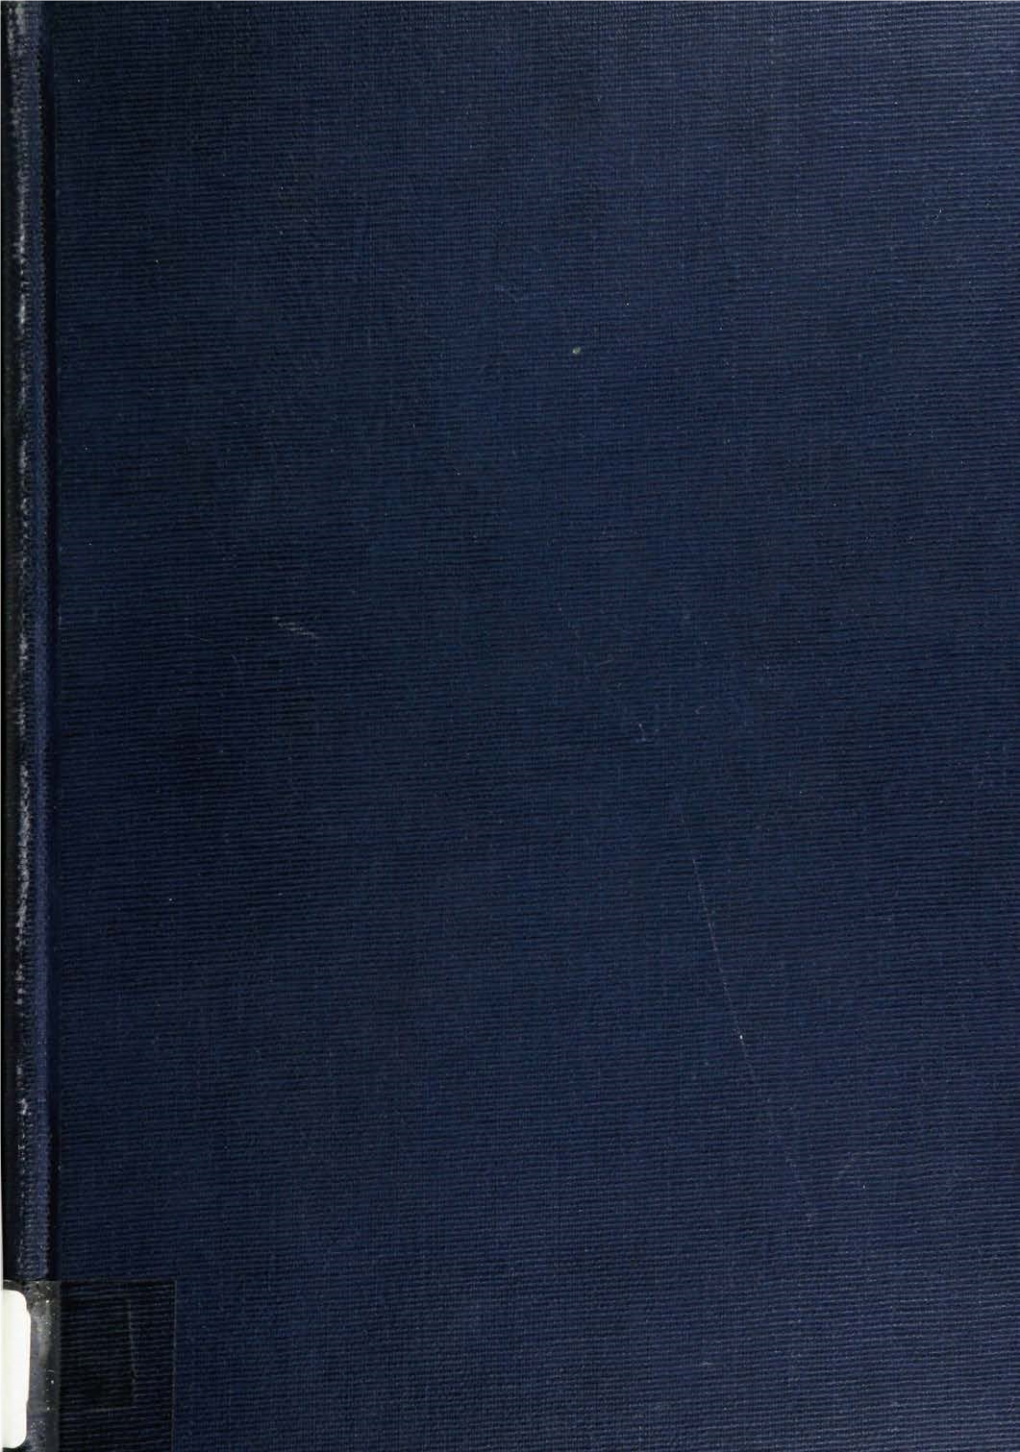 1938 Foreword